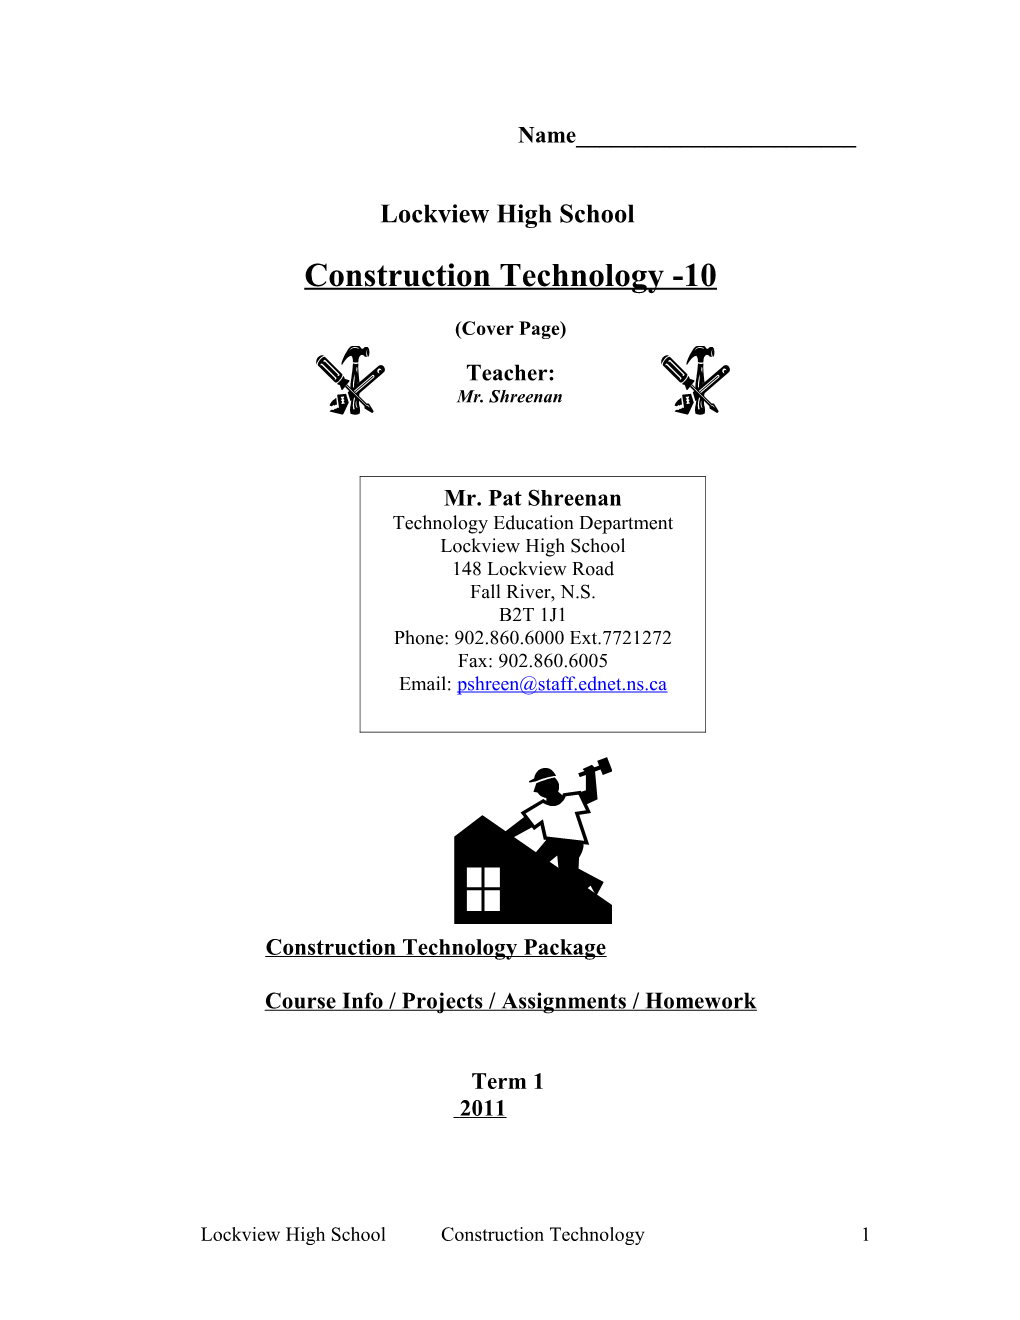 Lockview High School Contec 10 Mr